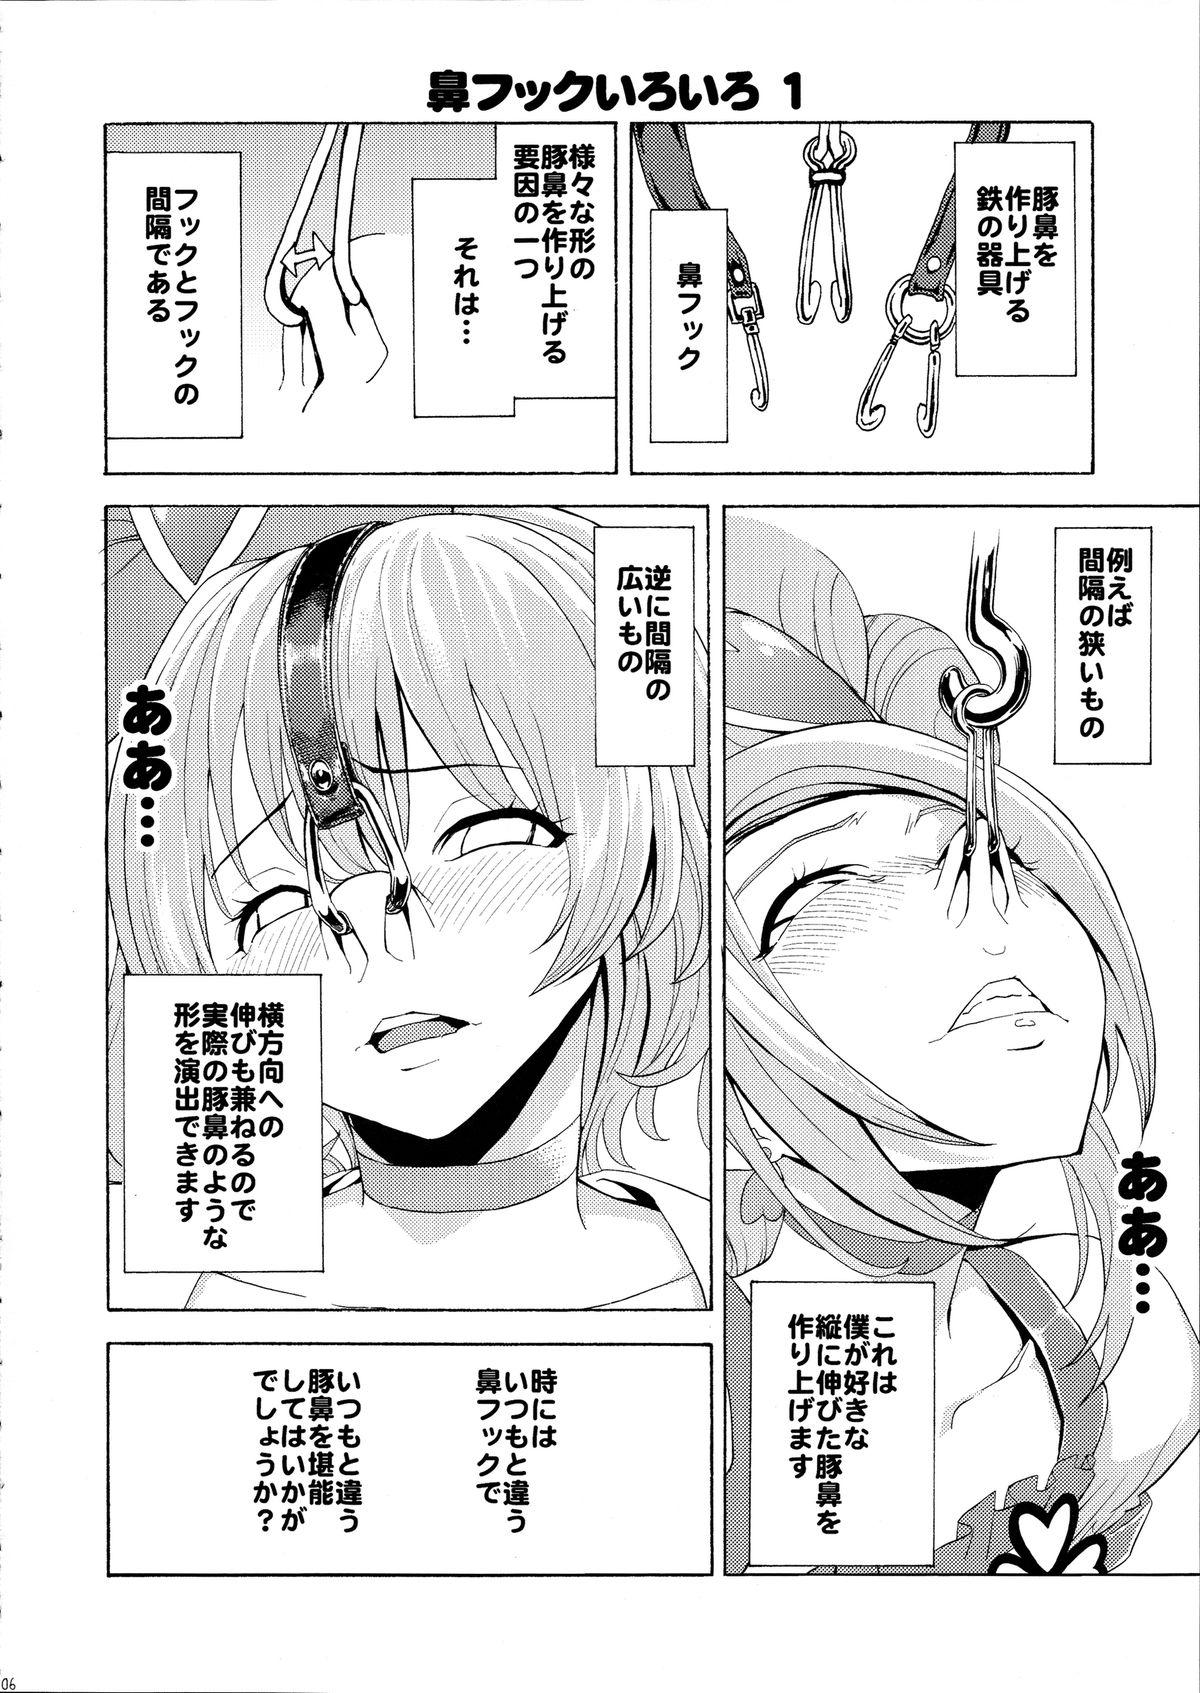 Sucking Hanazeme no hon sono 2 - Vocaloid Love plus Shy - Page 6